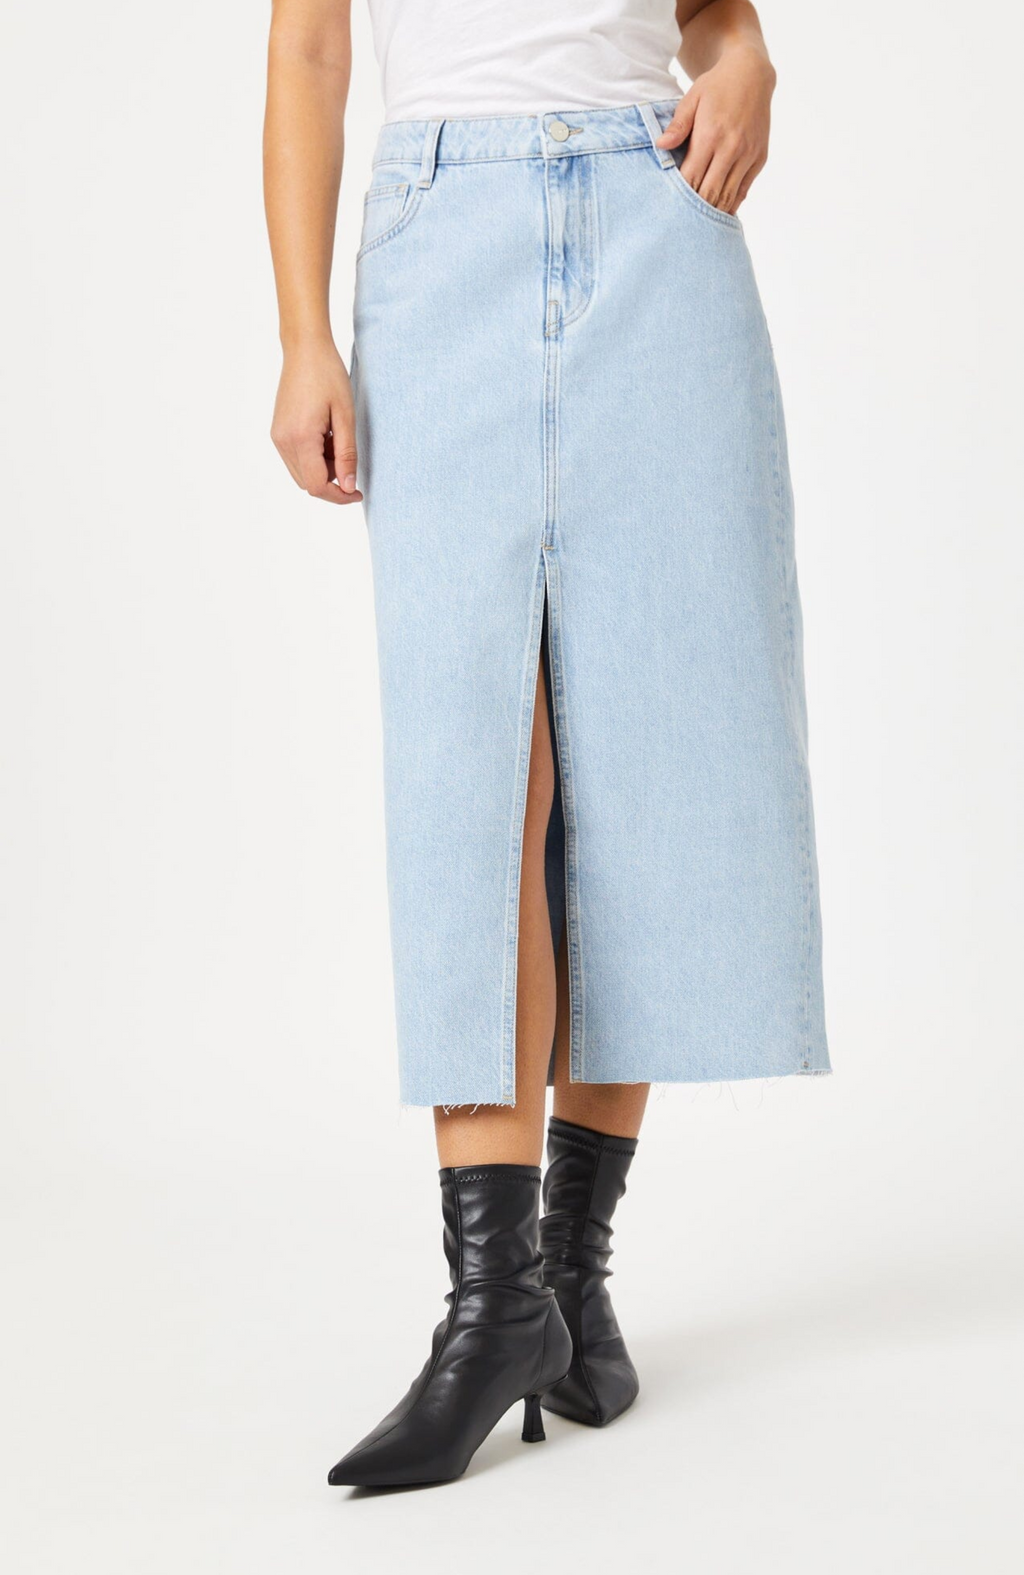 Mavi - Marin Bleached Denim Skirt